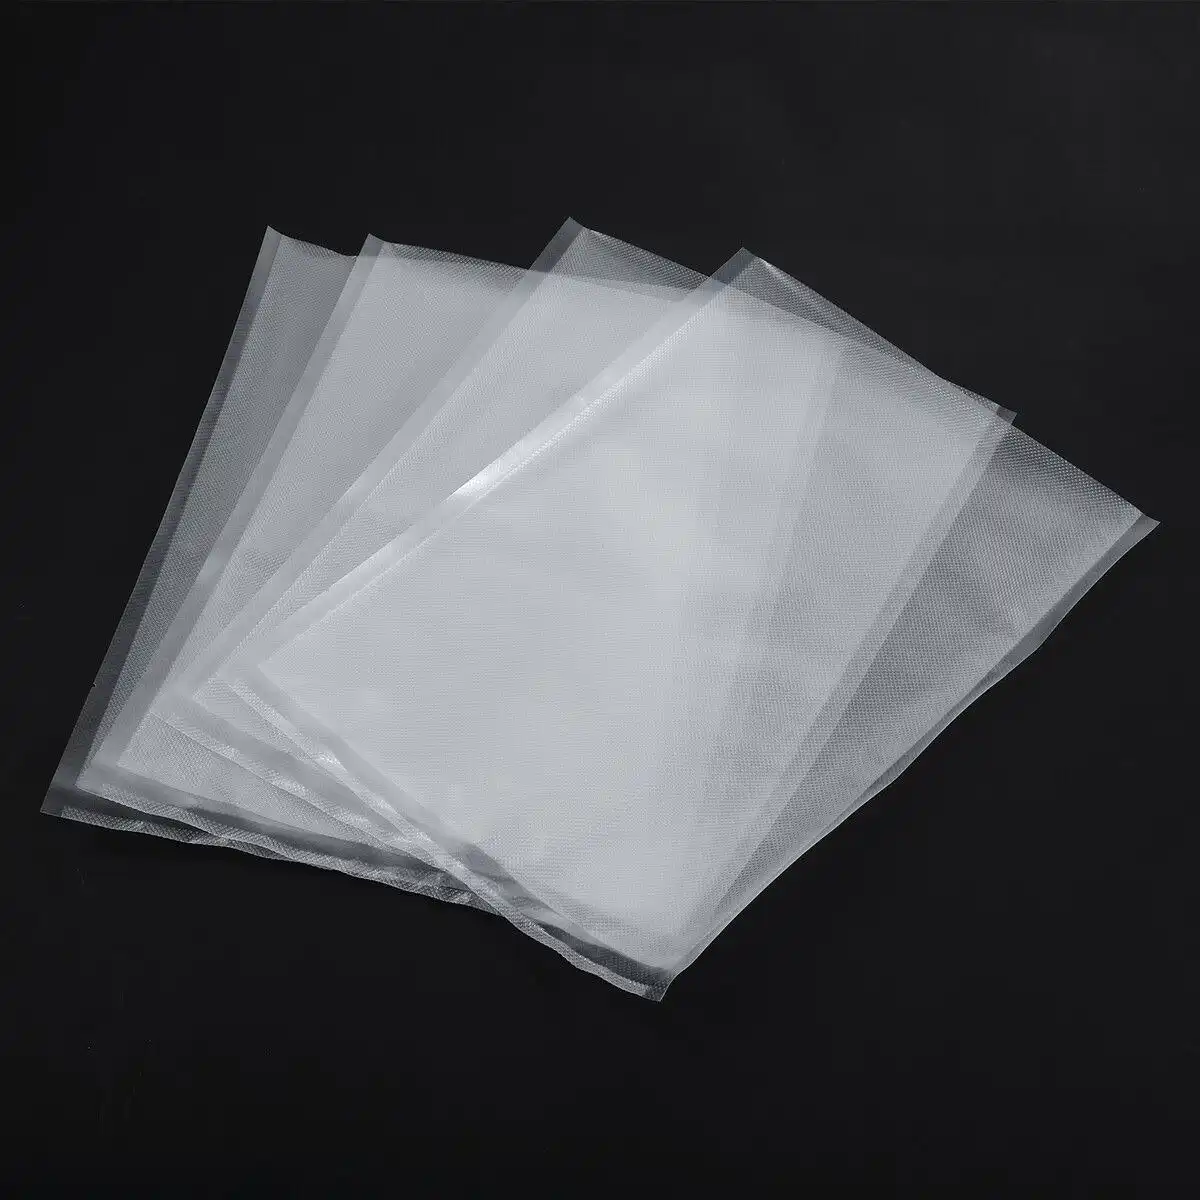 Ausway Vacuum Sealer Bags Food Storage Saver Plastic Reusable Precut 100PCS with Diamond Texture 28x40cm